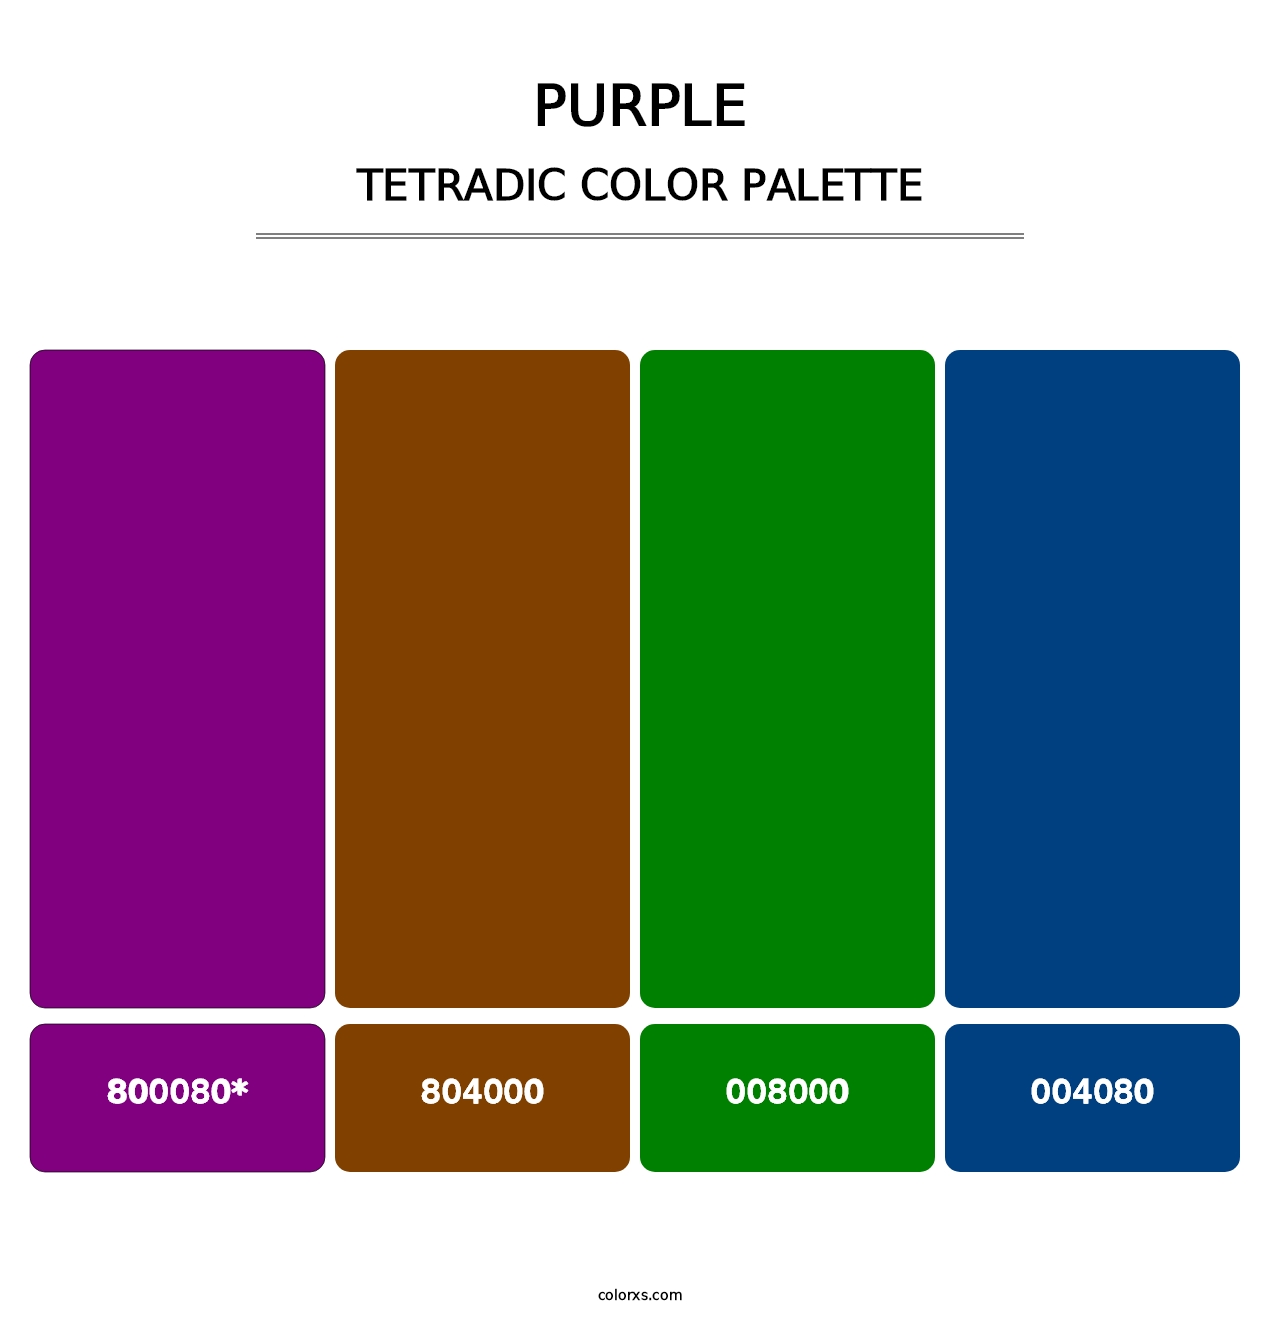 Purple - Tetradic Color Palette